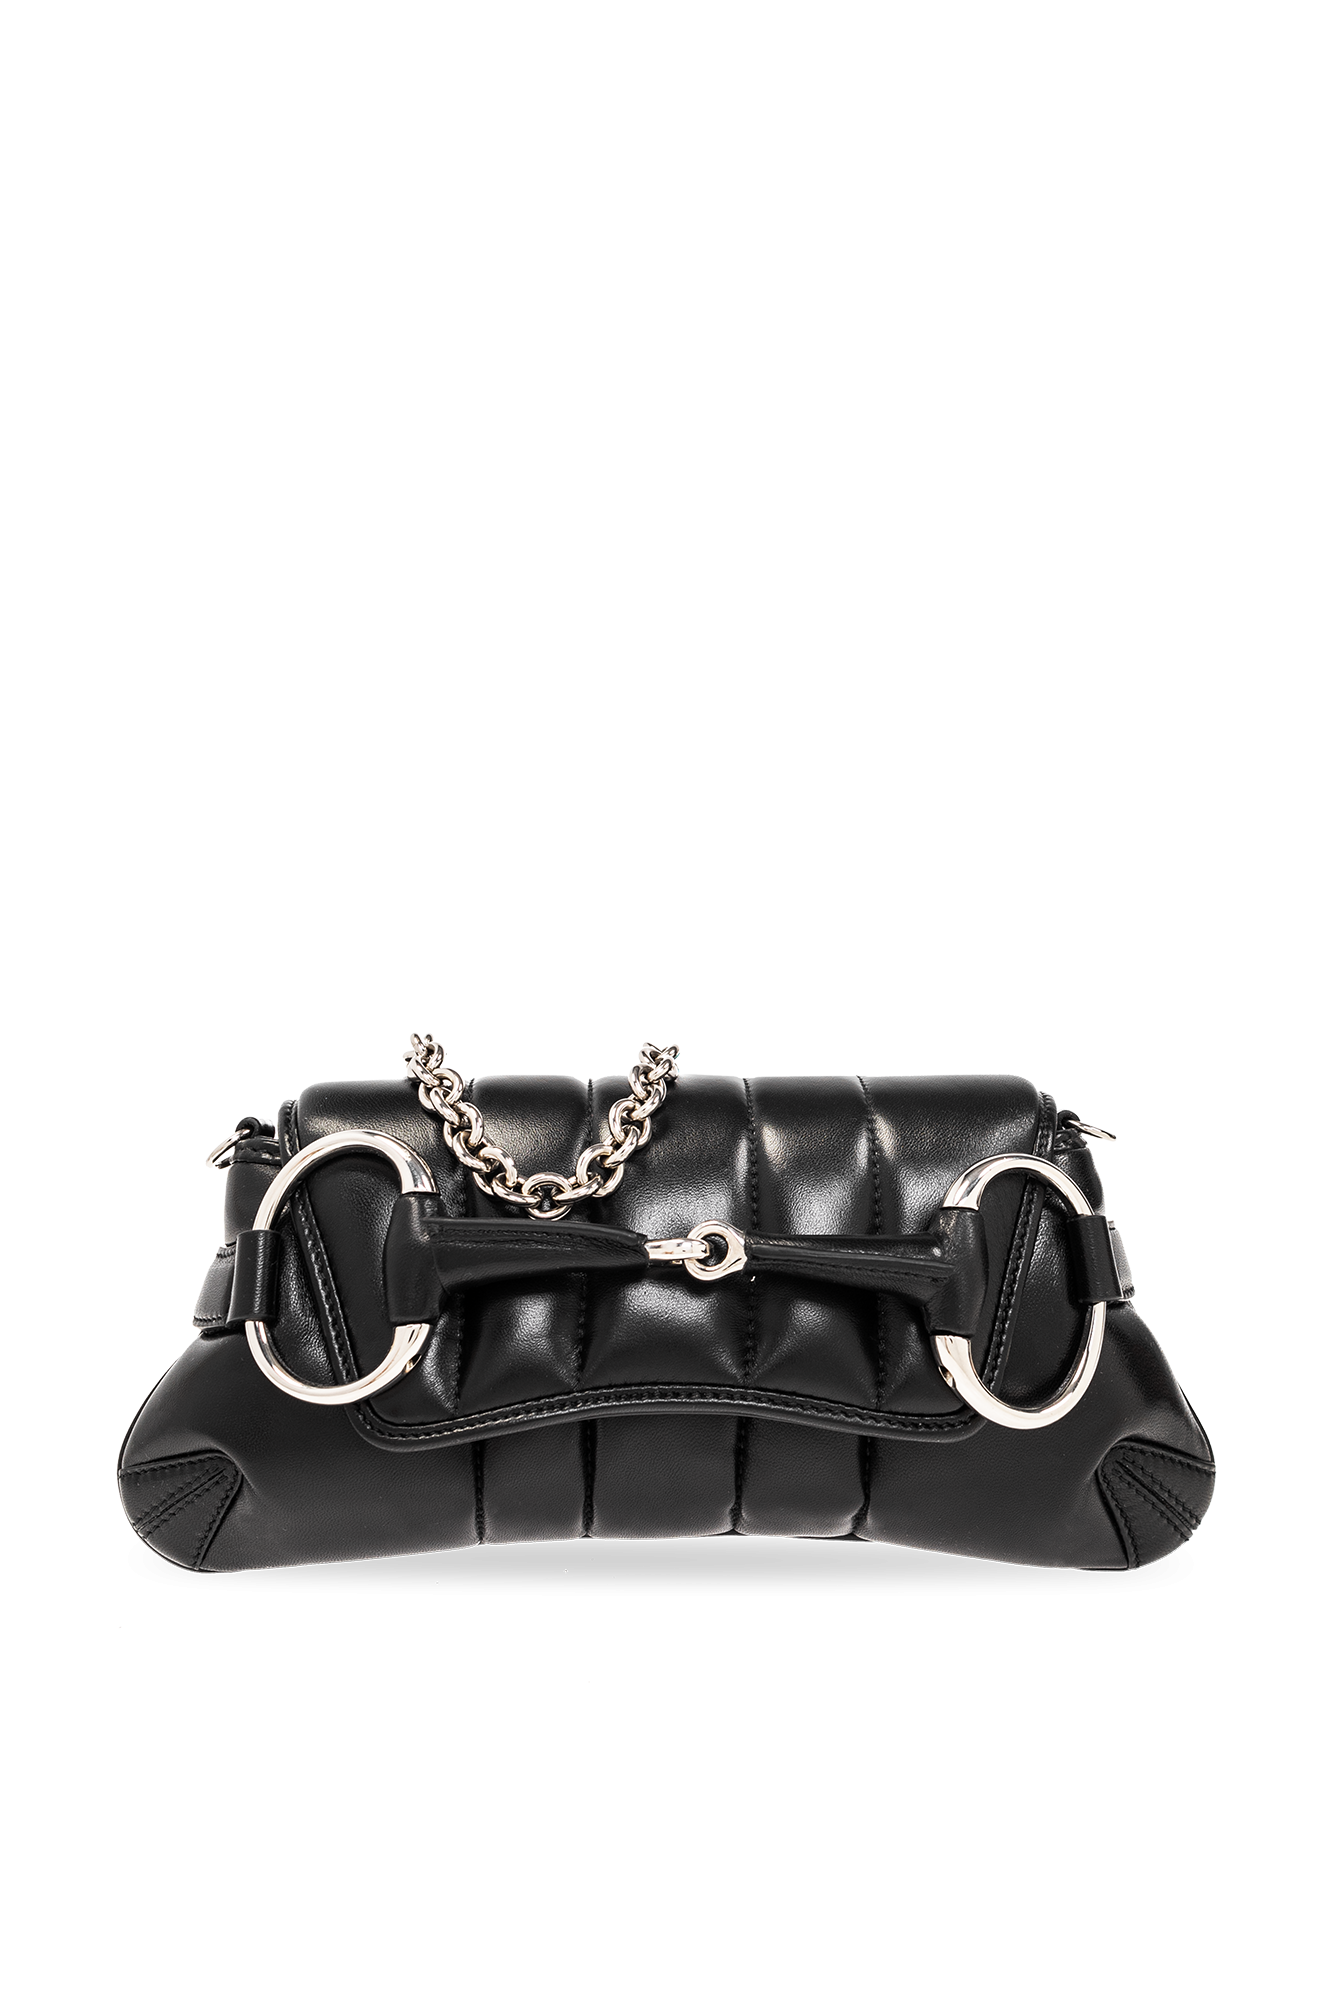 Gucci ‘Horsebit Chain Small’ handbag